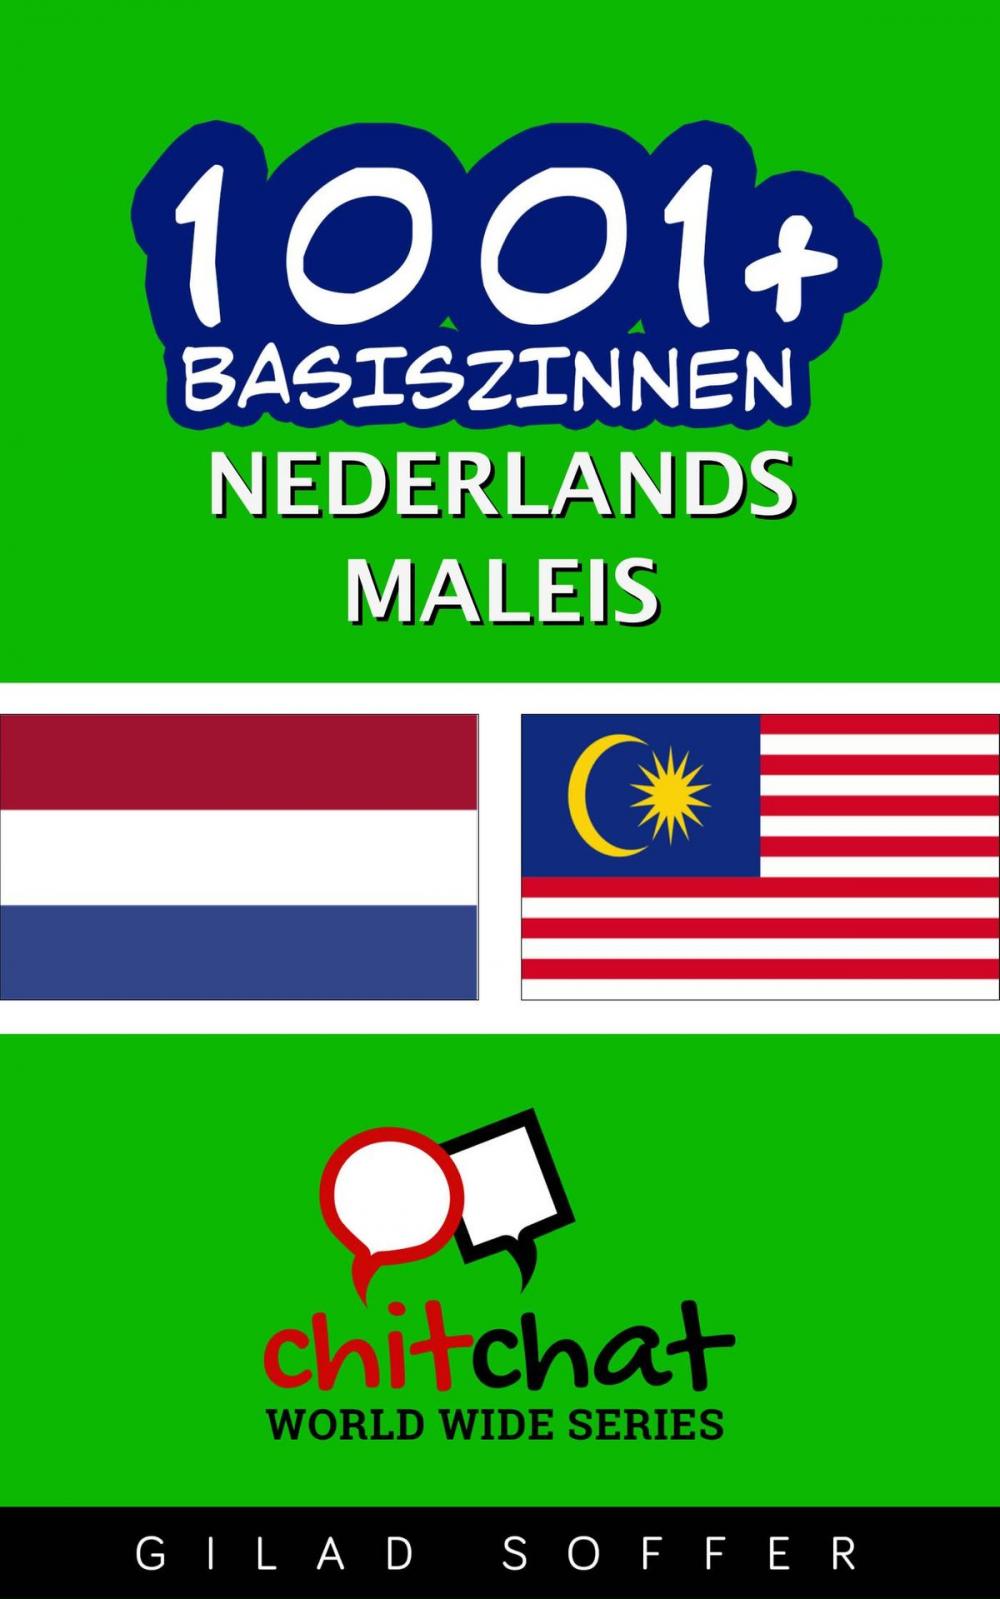 Big bigCover of 1001+ basiszinnen nederlands - Maleis